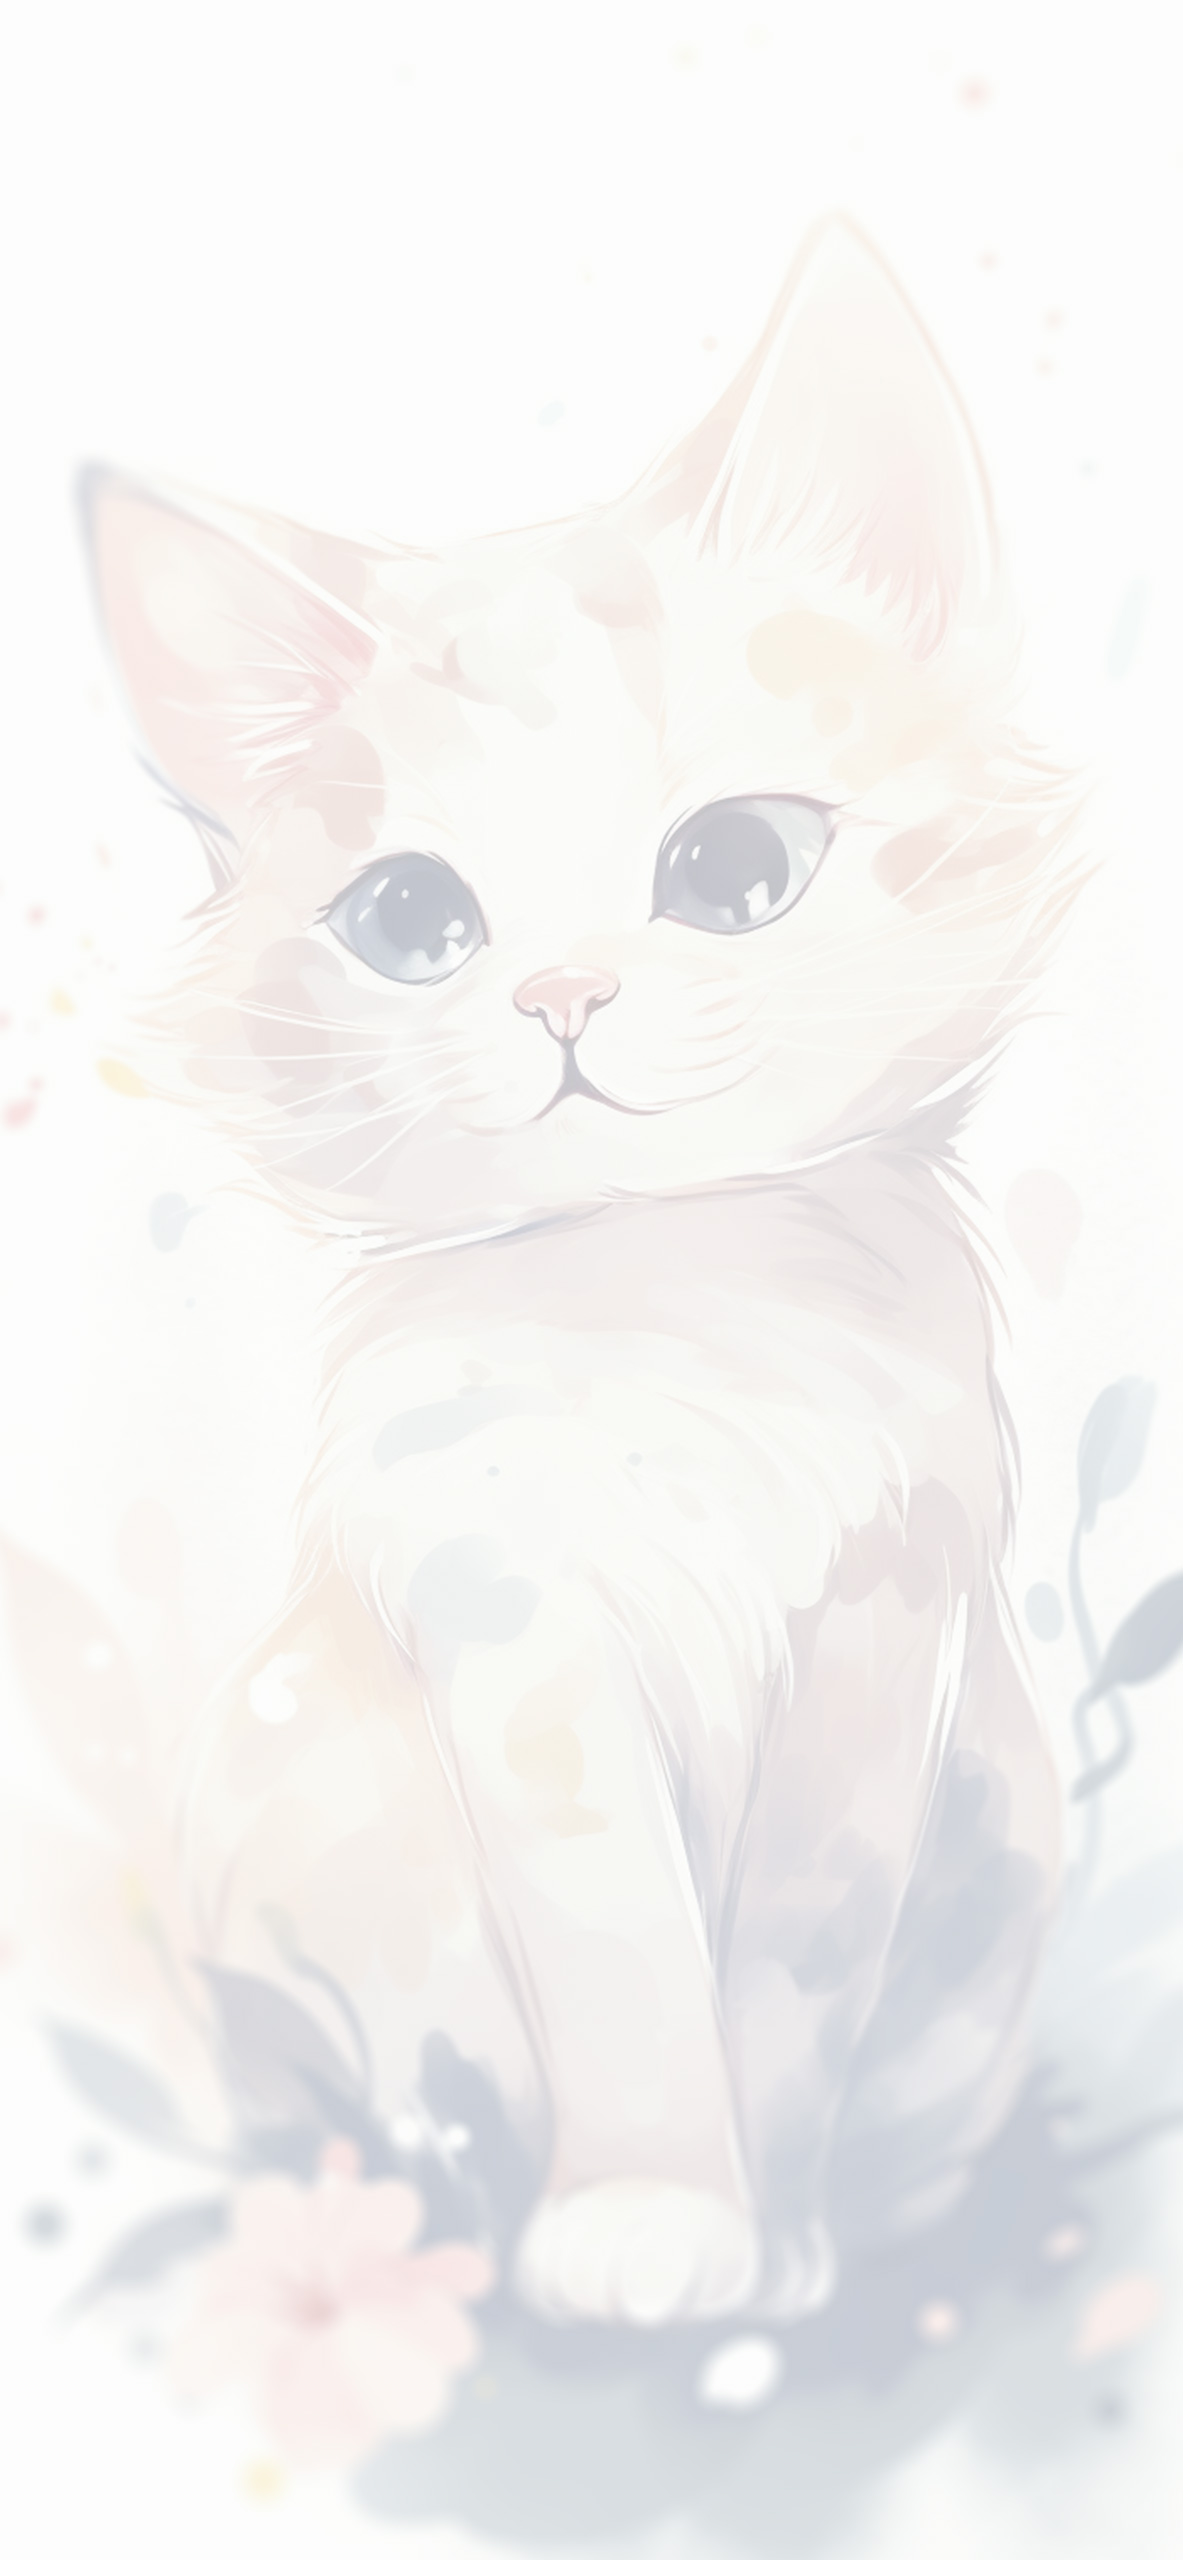 Cute Cat White Art Wallpaper Cute Cat Wallpaper for iPhone